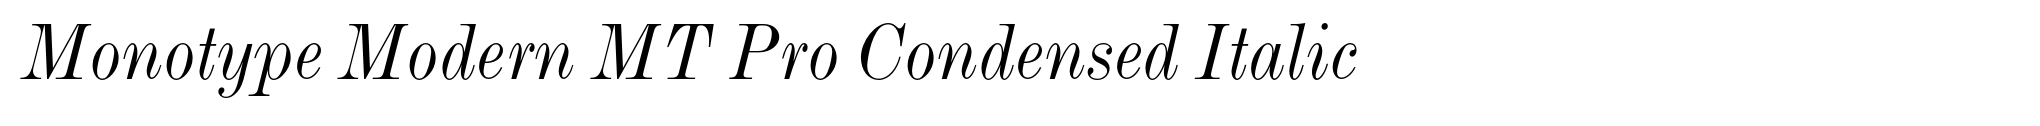 Monotype Modern MT Pro Condensed Italic image